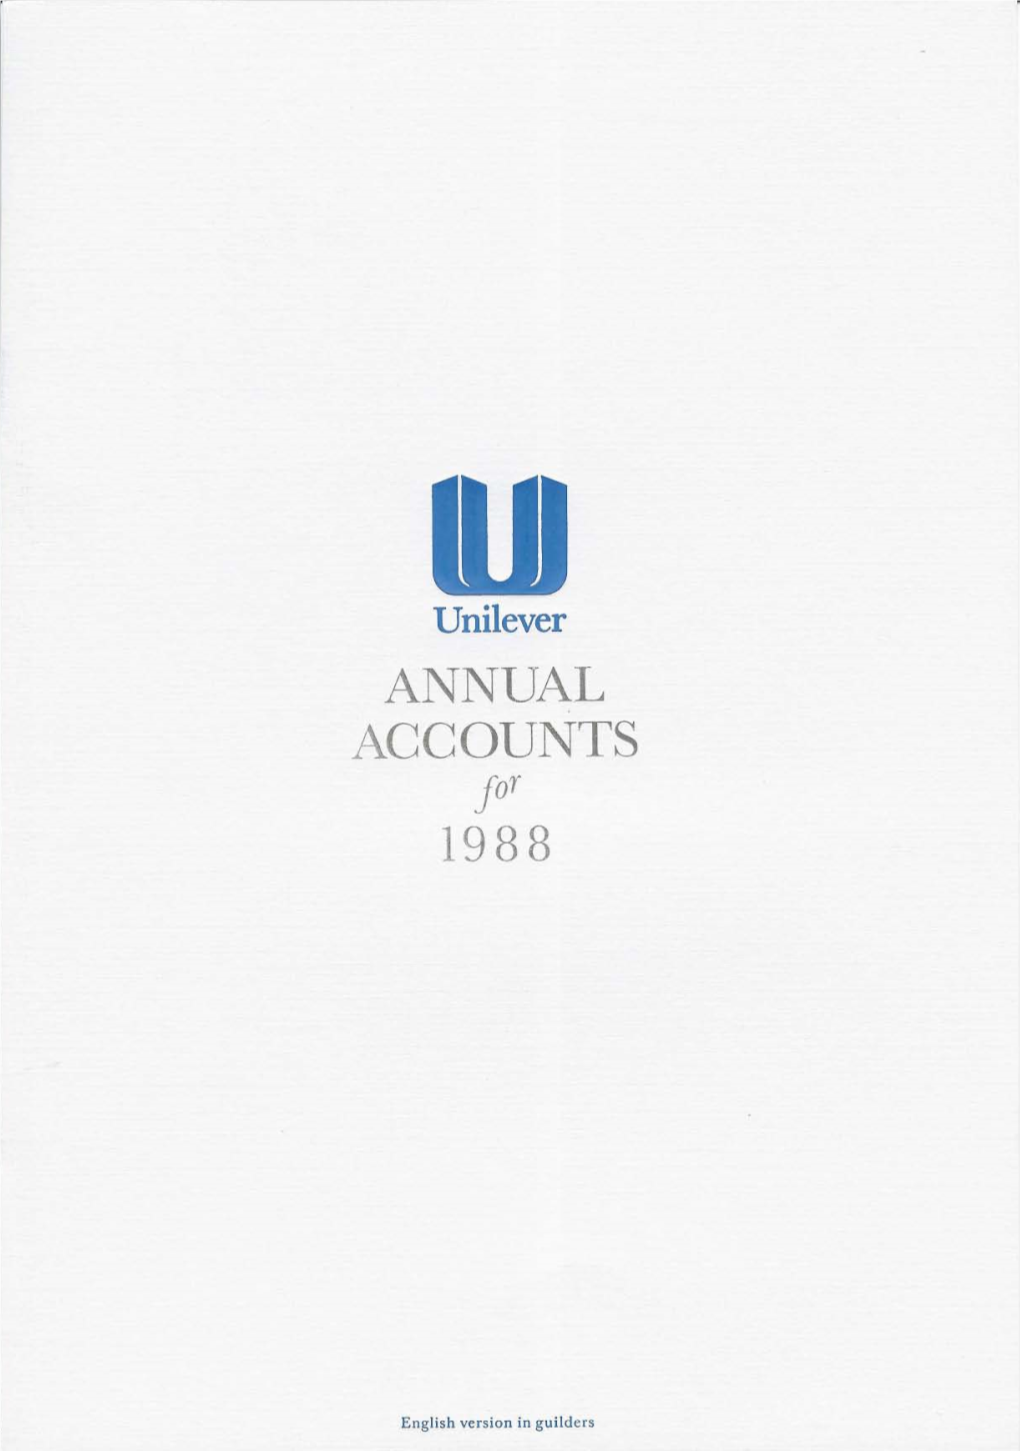 1988 Annual Report & Accounts